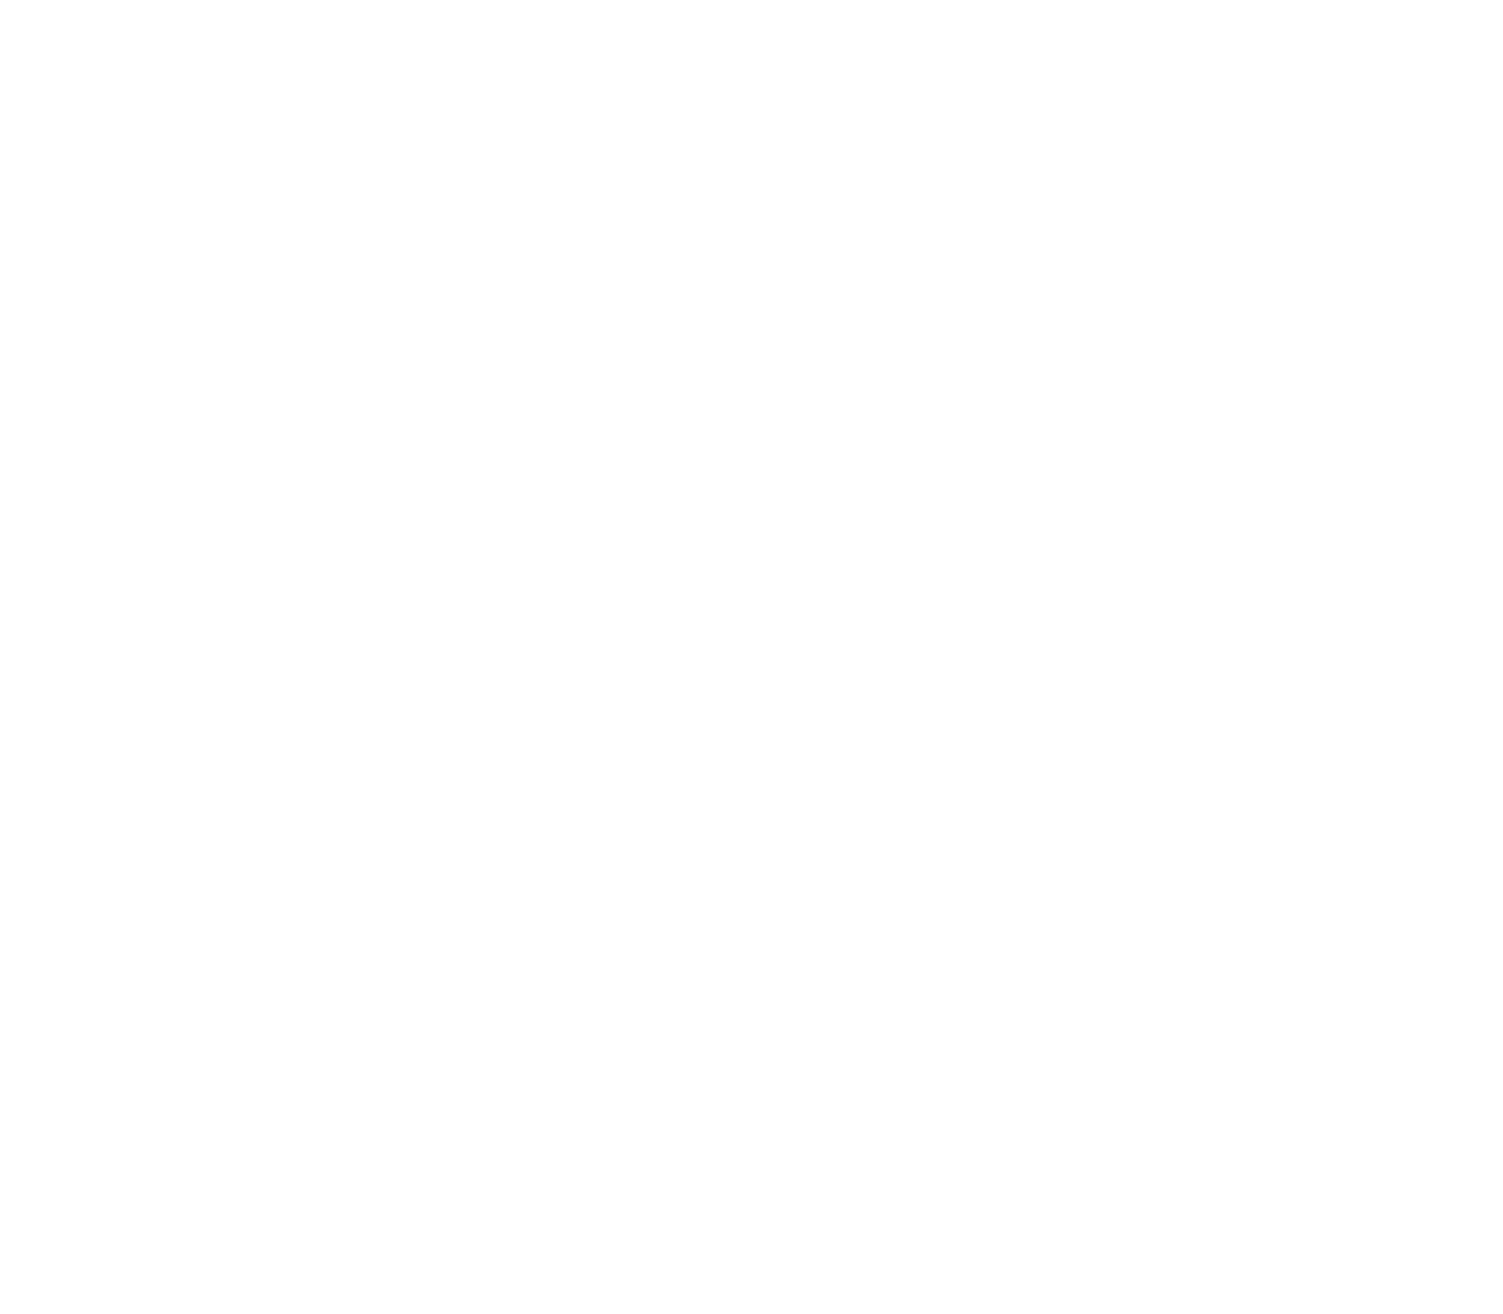 Fastighets AB Balder logo pour fonds sombres (PNG transparent)